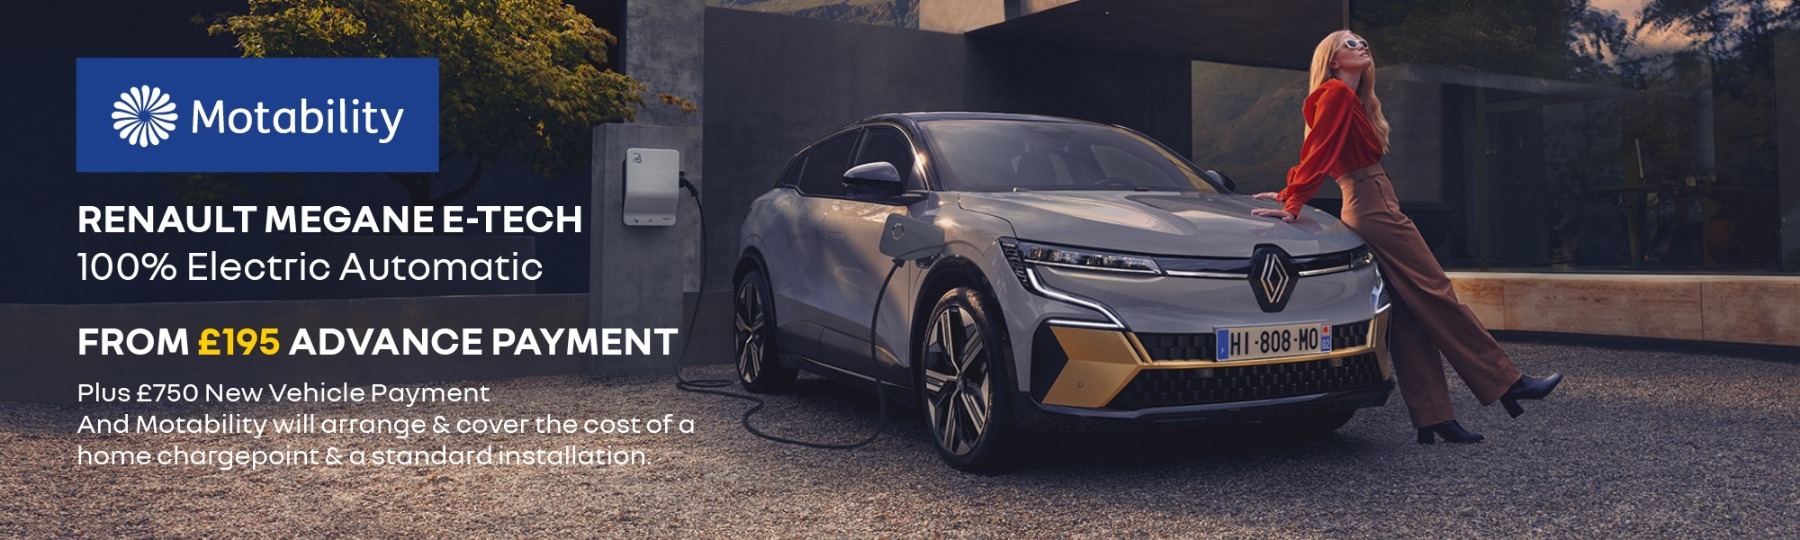 Renault Megane E-Tech 100% electric Motability Offer